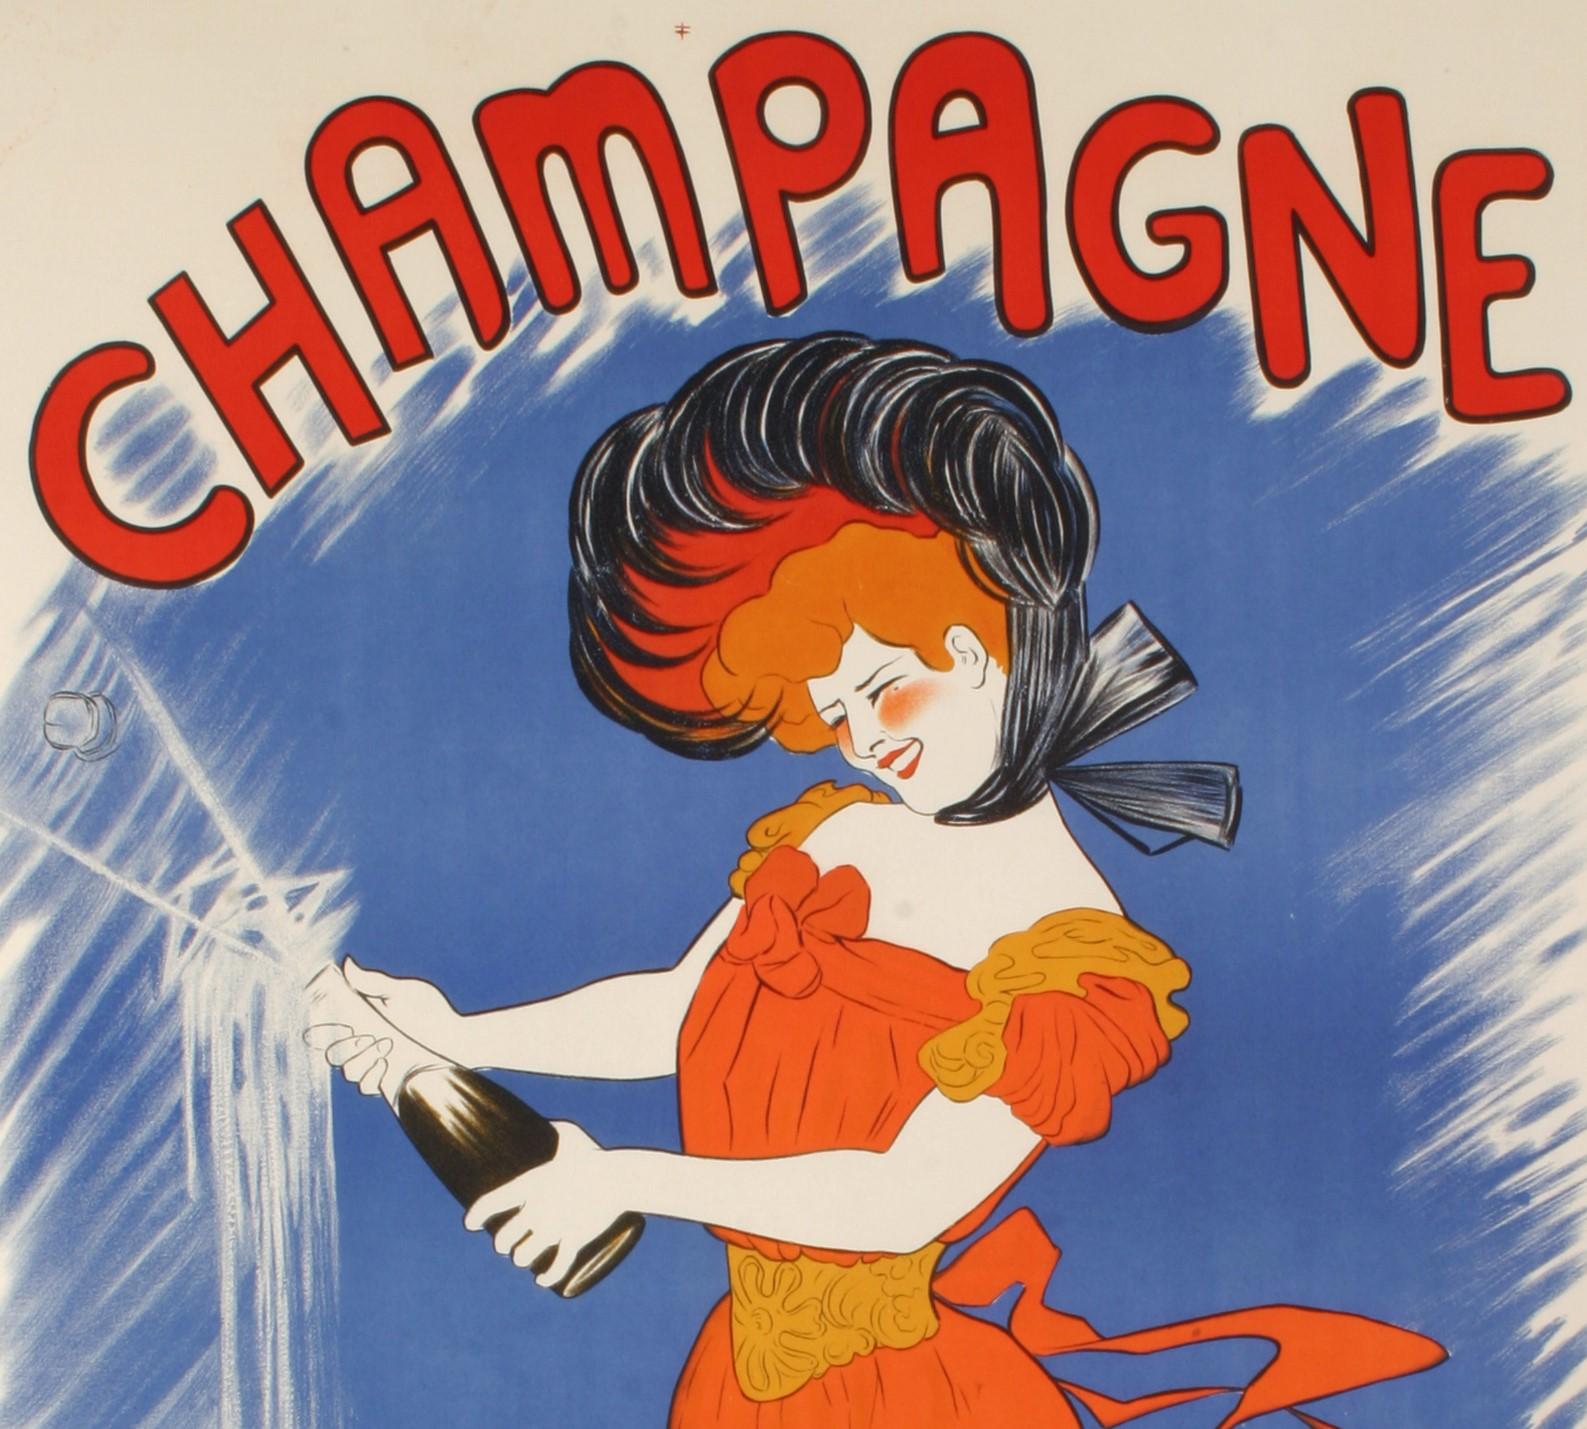 Original Vintage Alcohol Poster for Champagne Delbeck dating from 1902 by Leonetto Cappiello.

Artist: Leonetto Cappiello (1875 - 1942) 
Title: Champagne Delbeck
Date: 1902
Size: 33 x 54.5 in / 96.5 x 138.5 cm
Printer : Imp. Vercasson, 43 rue